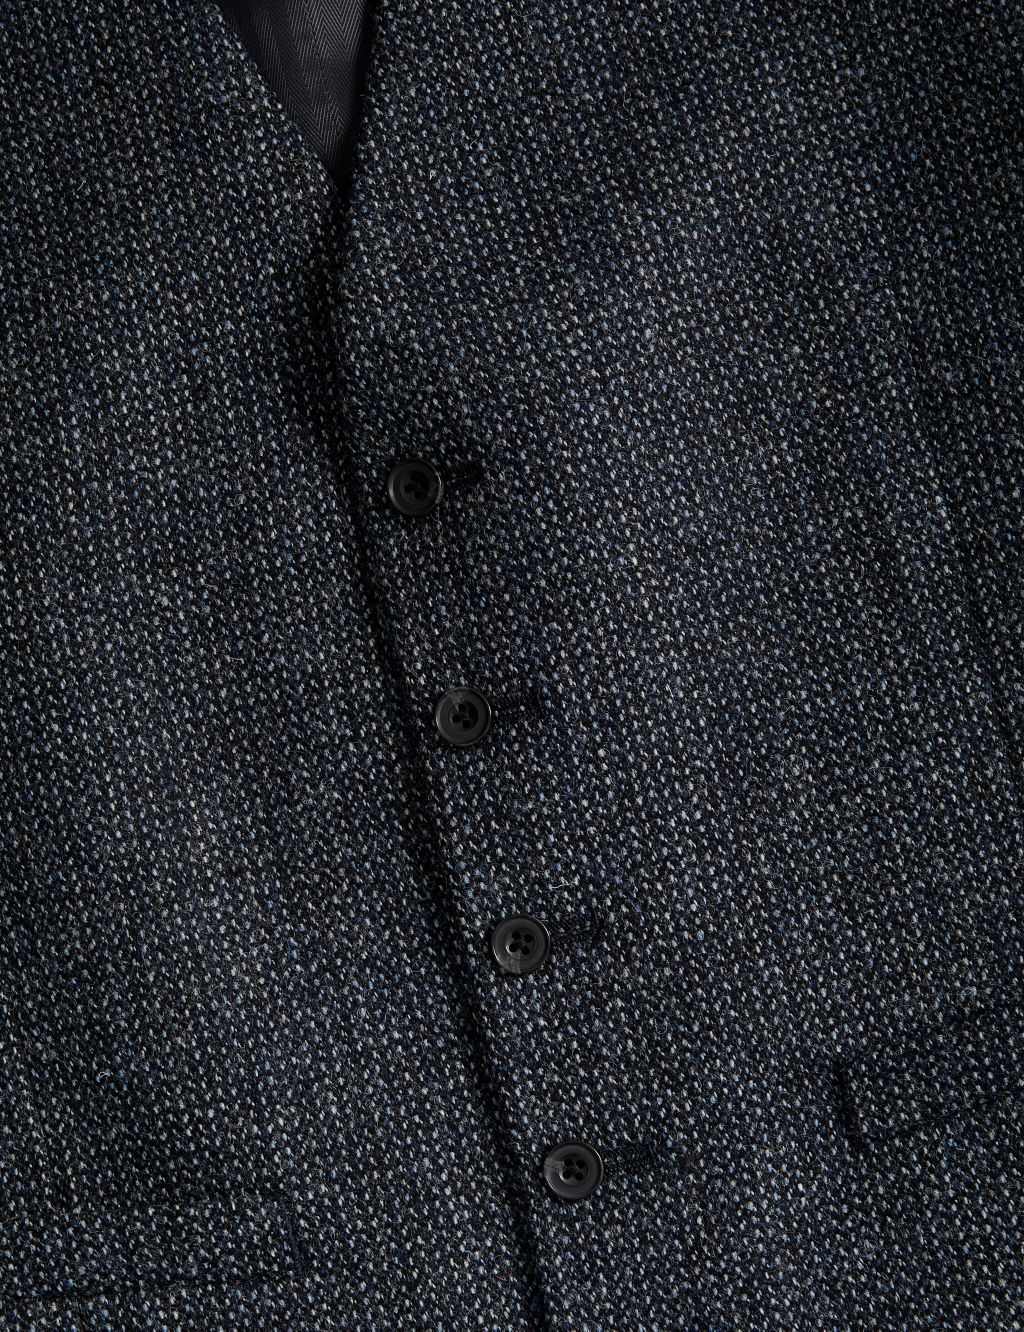 British Wool Rich Textured Waistcoat image 6